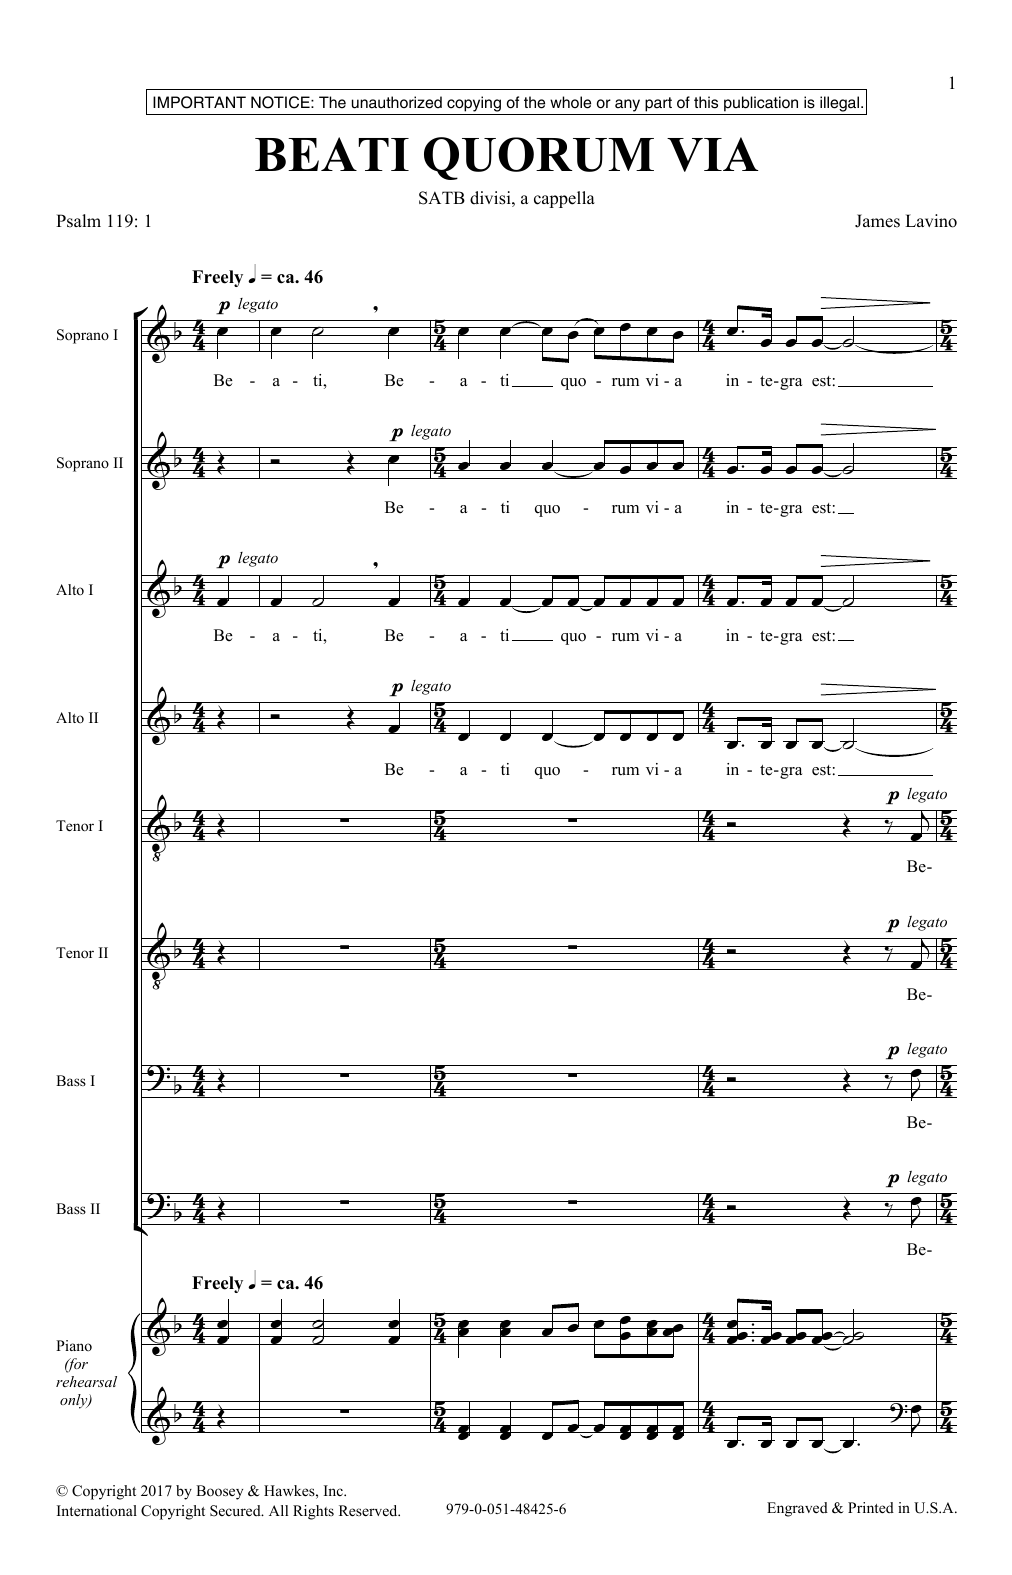 Download James Lavino Beati Quorum Via Sheet Music